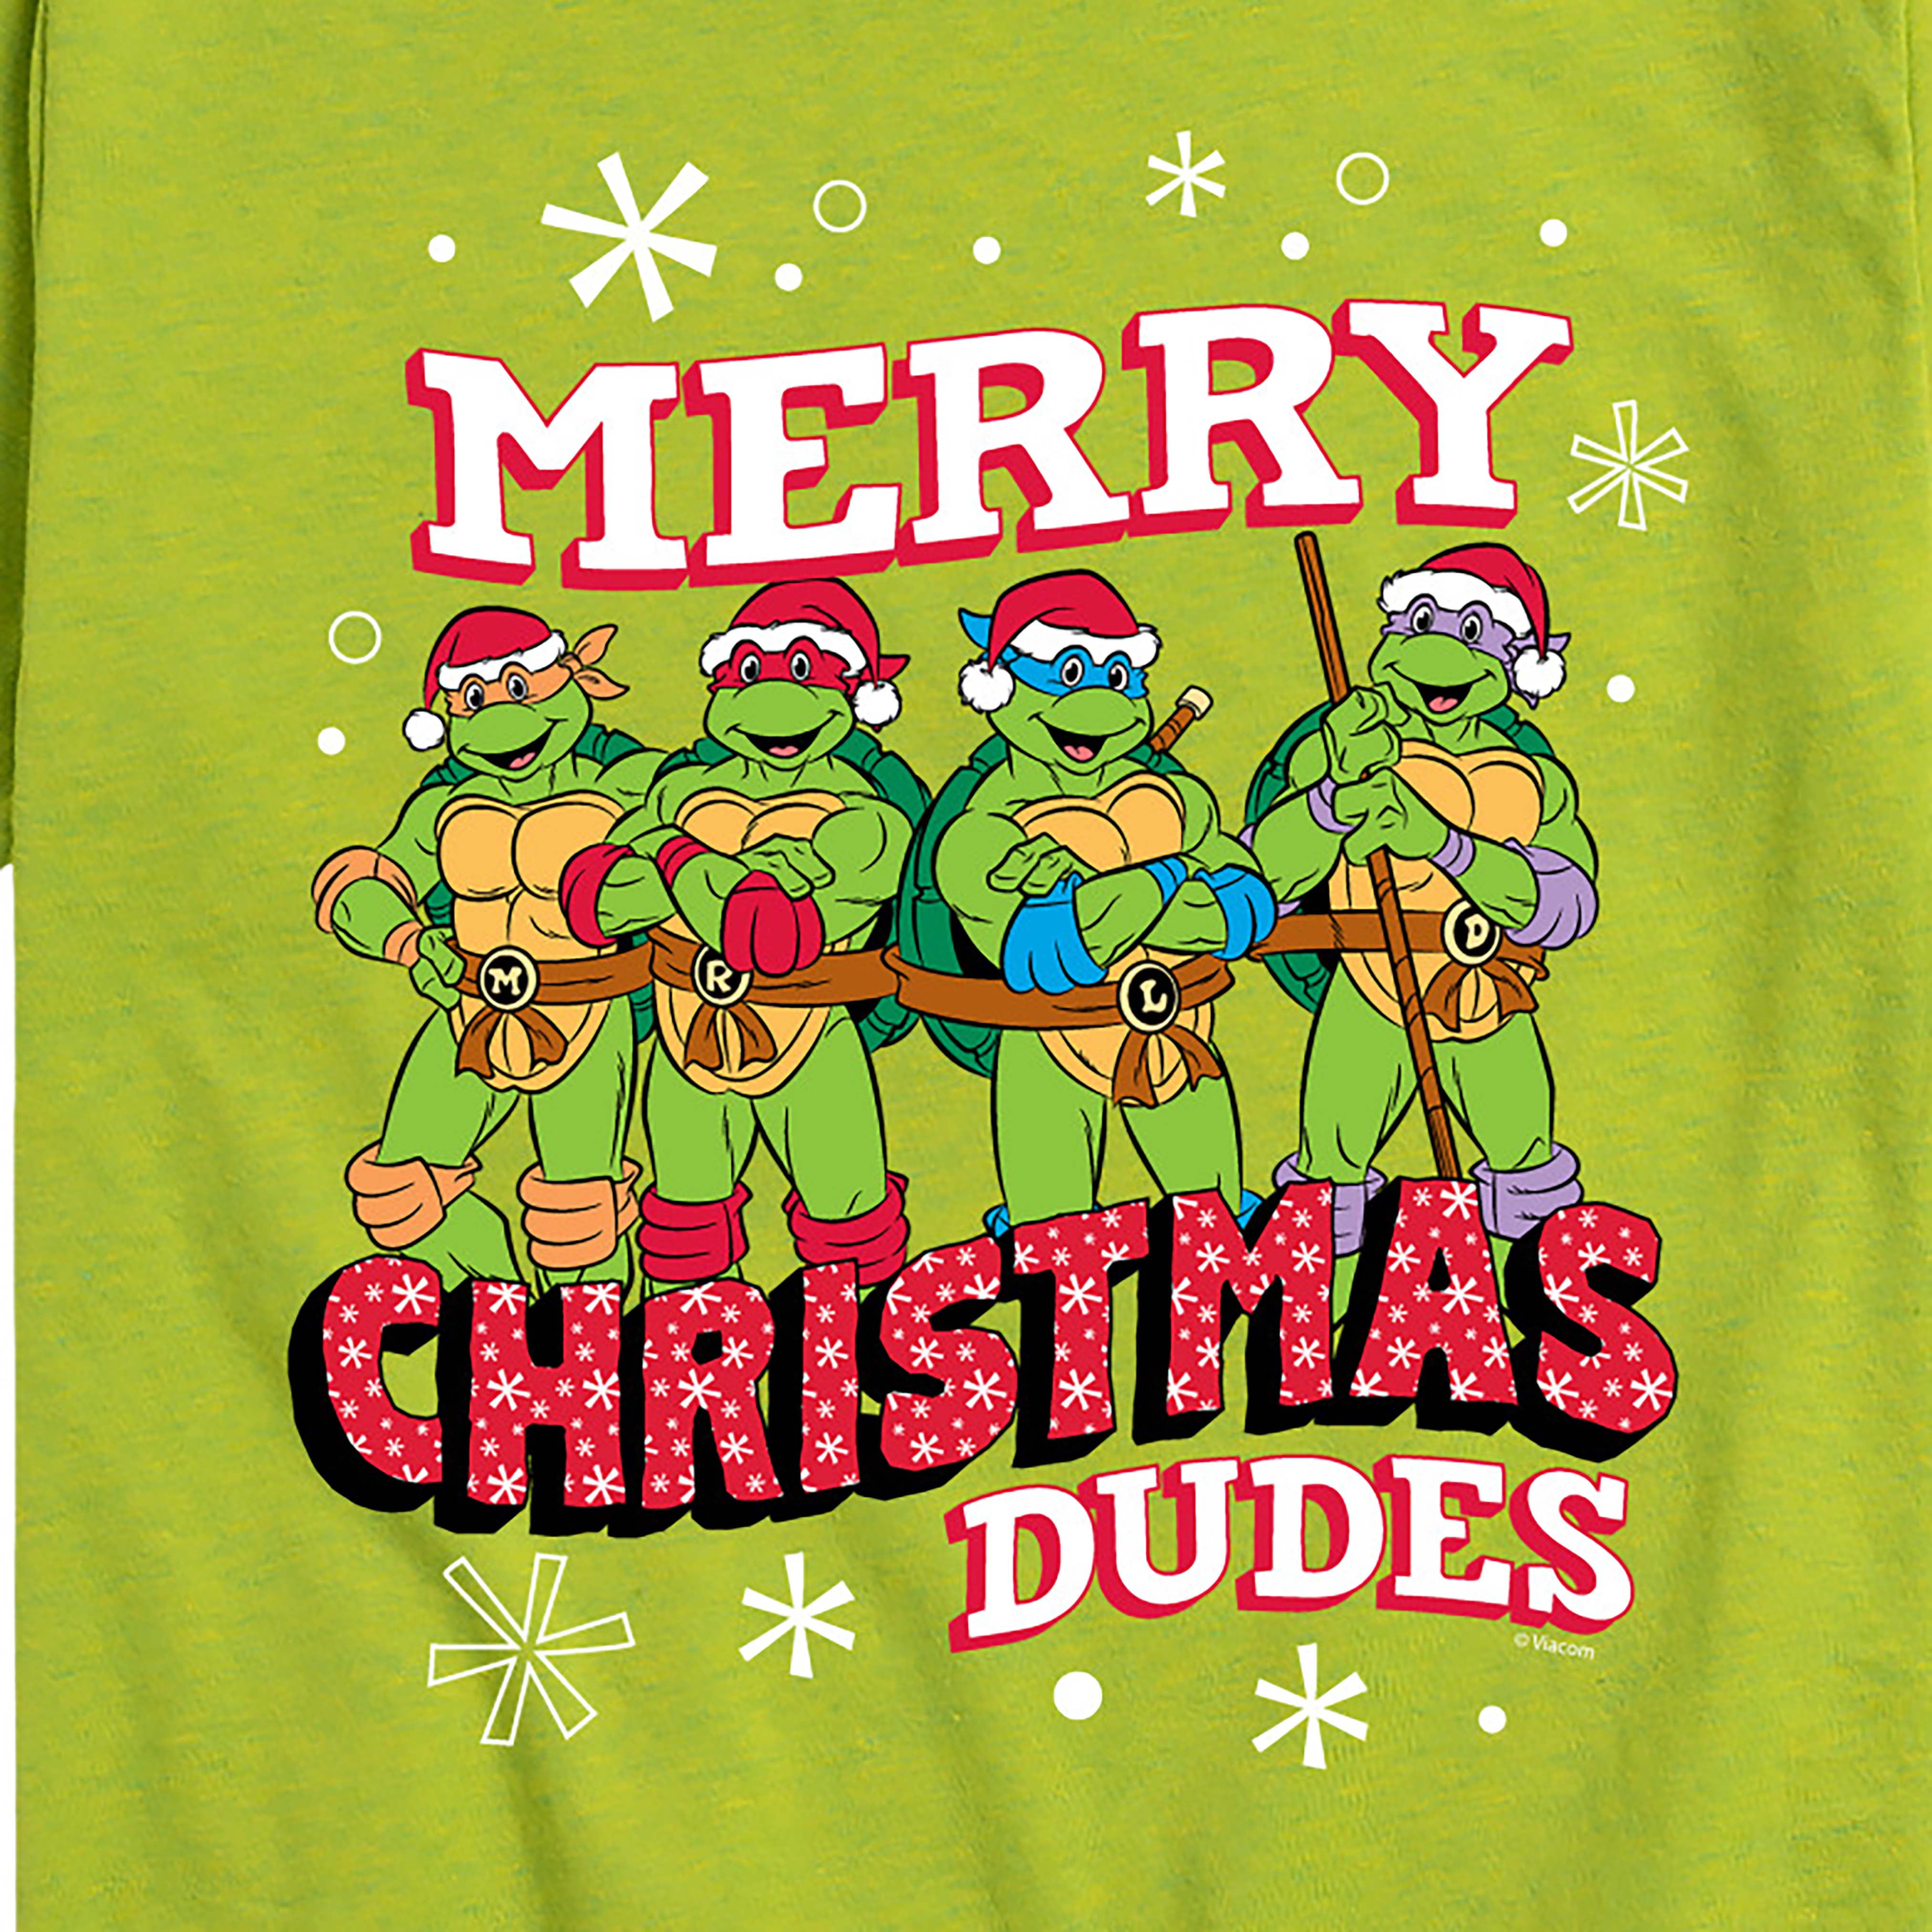 Teenage Muntant Ninja Turtle - Merry Christmas Dude - Toddler And Youth  Short Sleeve Graphic T-Shirt